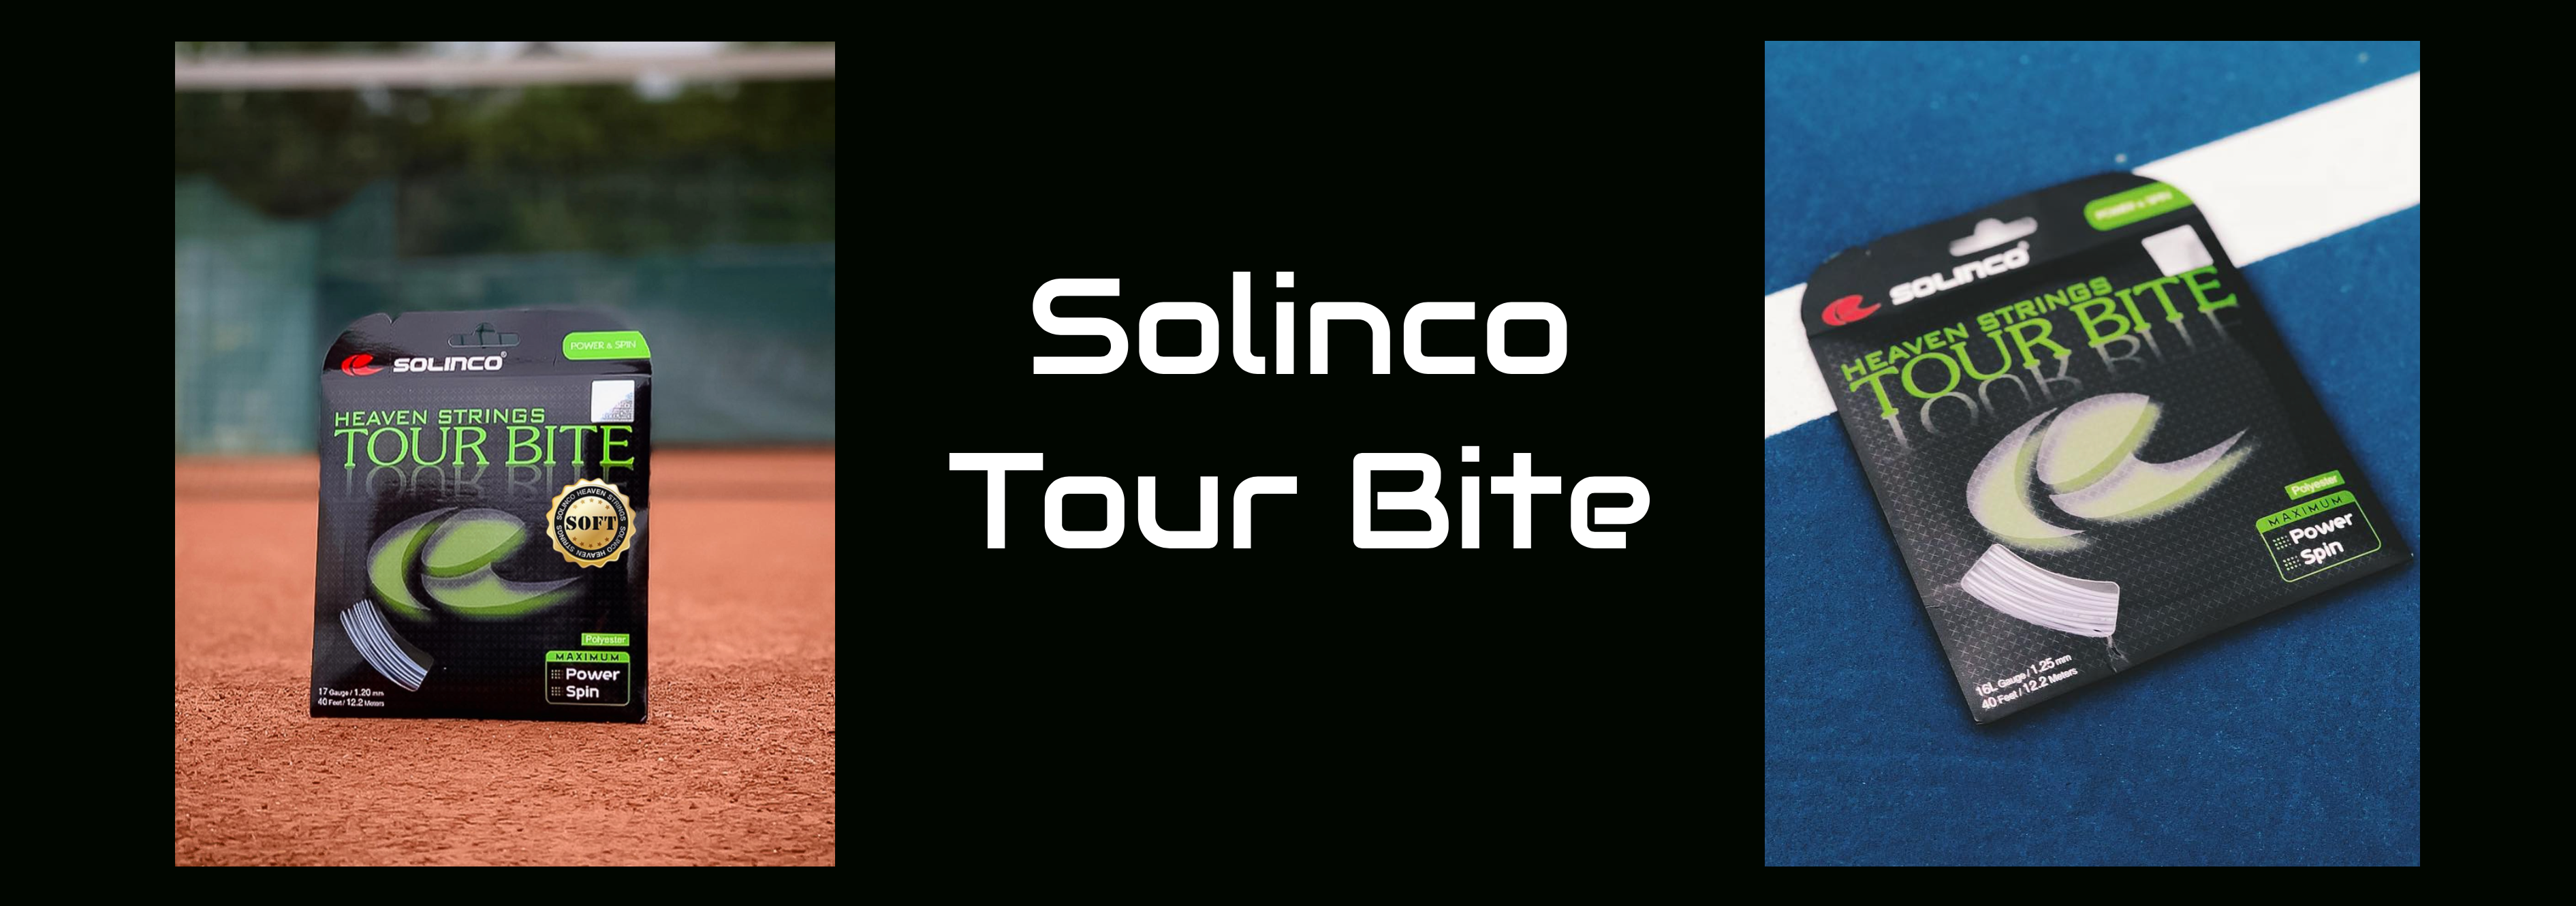 Solinco Tour Bite 16L Tennis String (Reel)